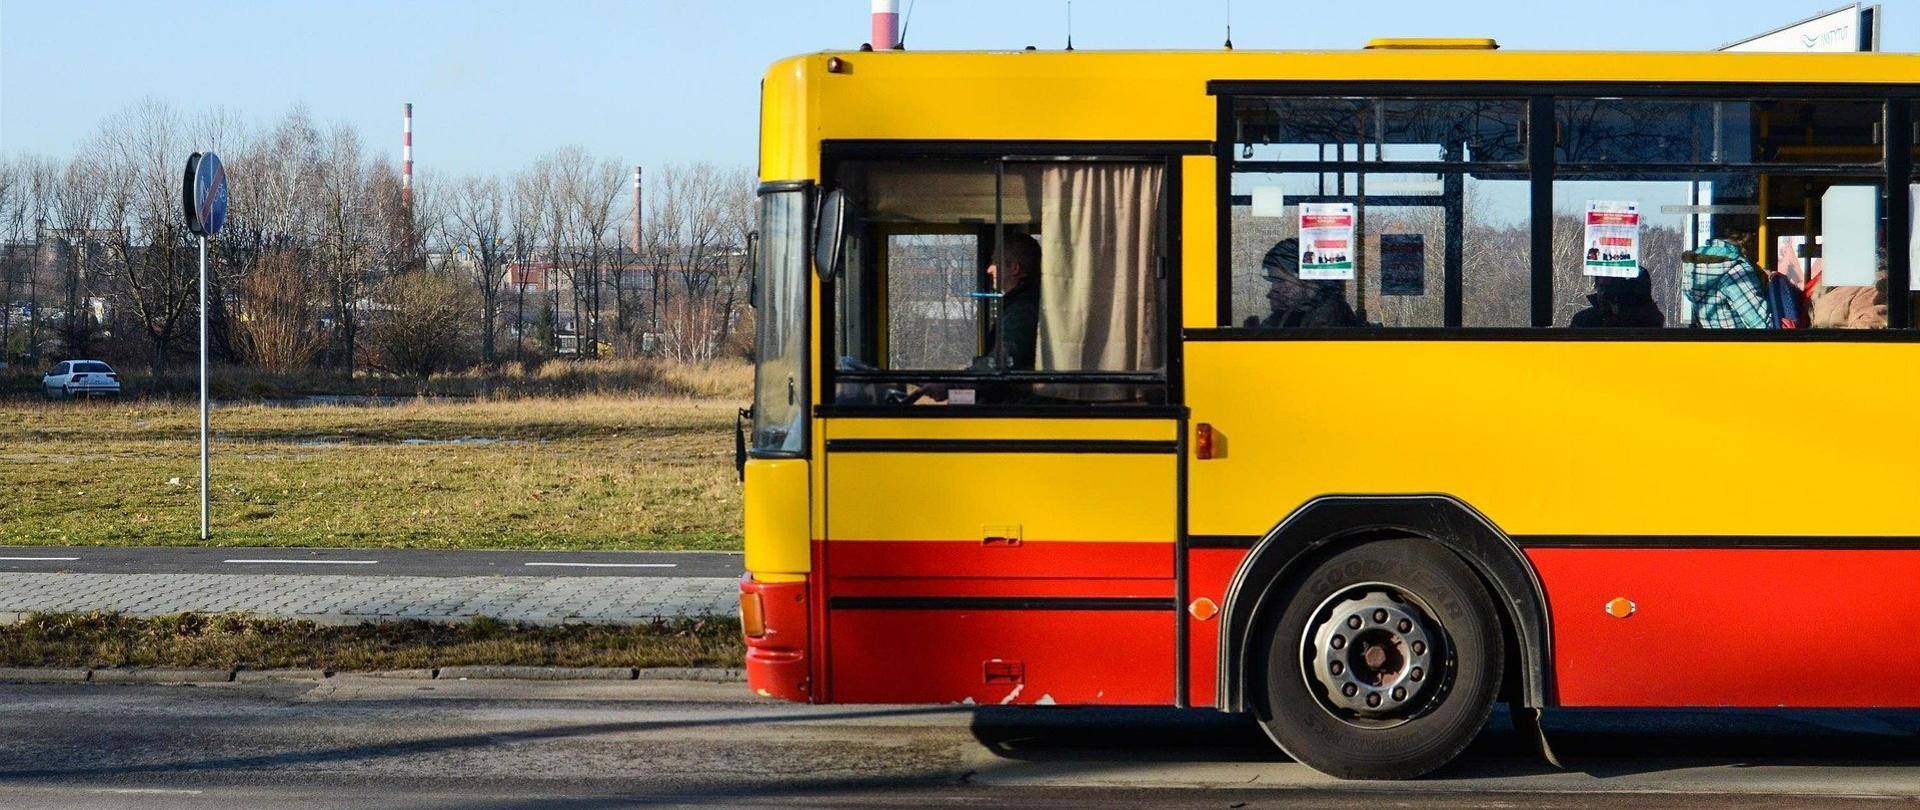 autobus miejski